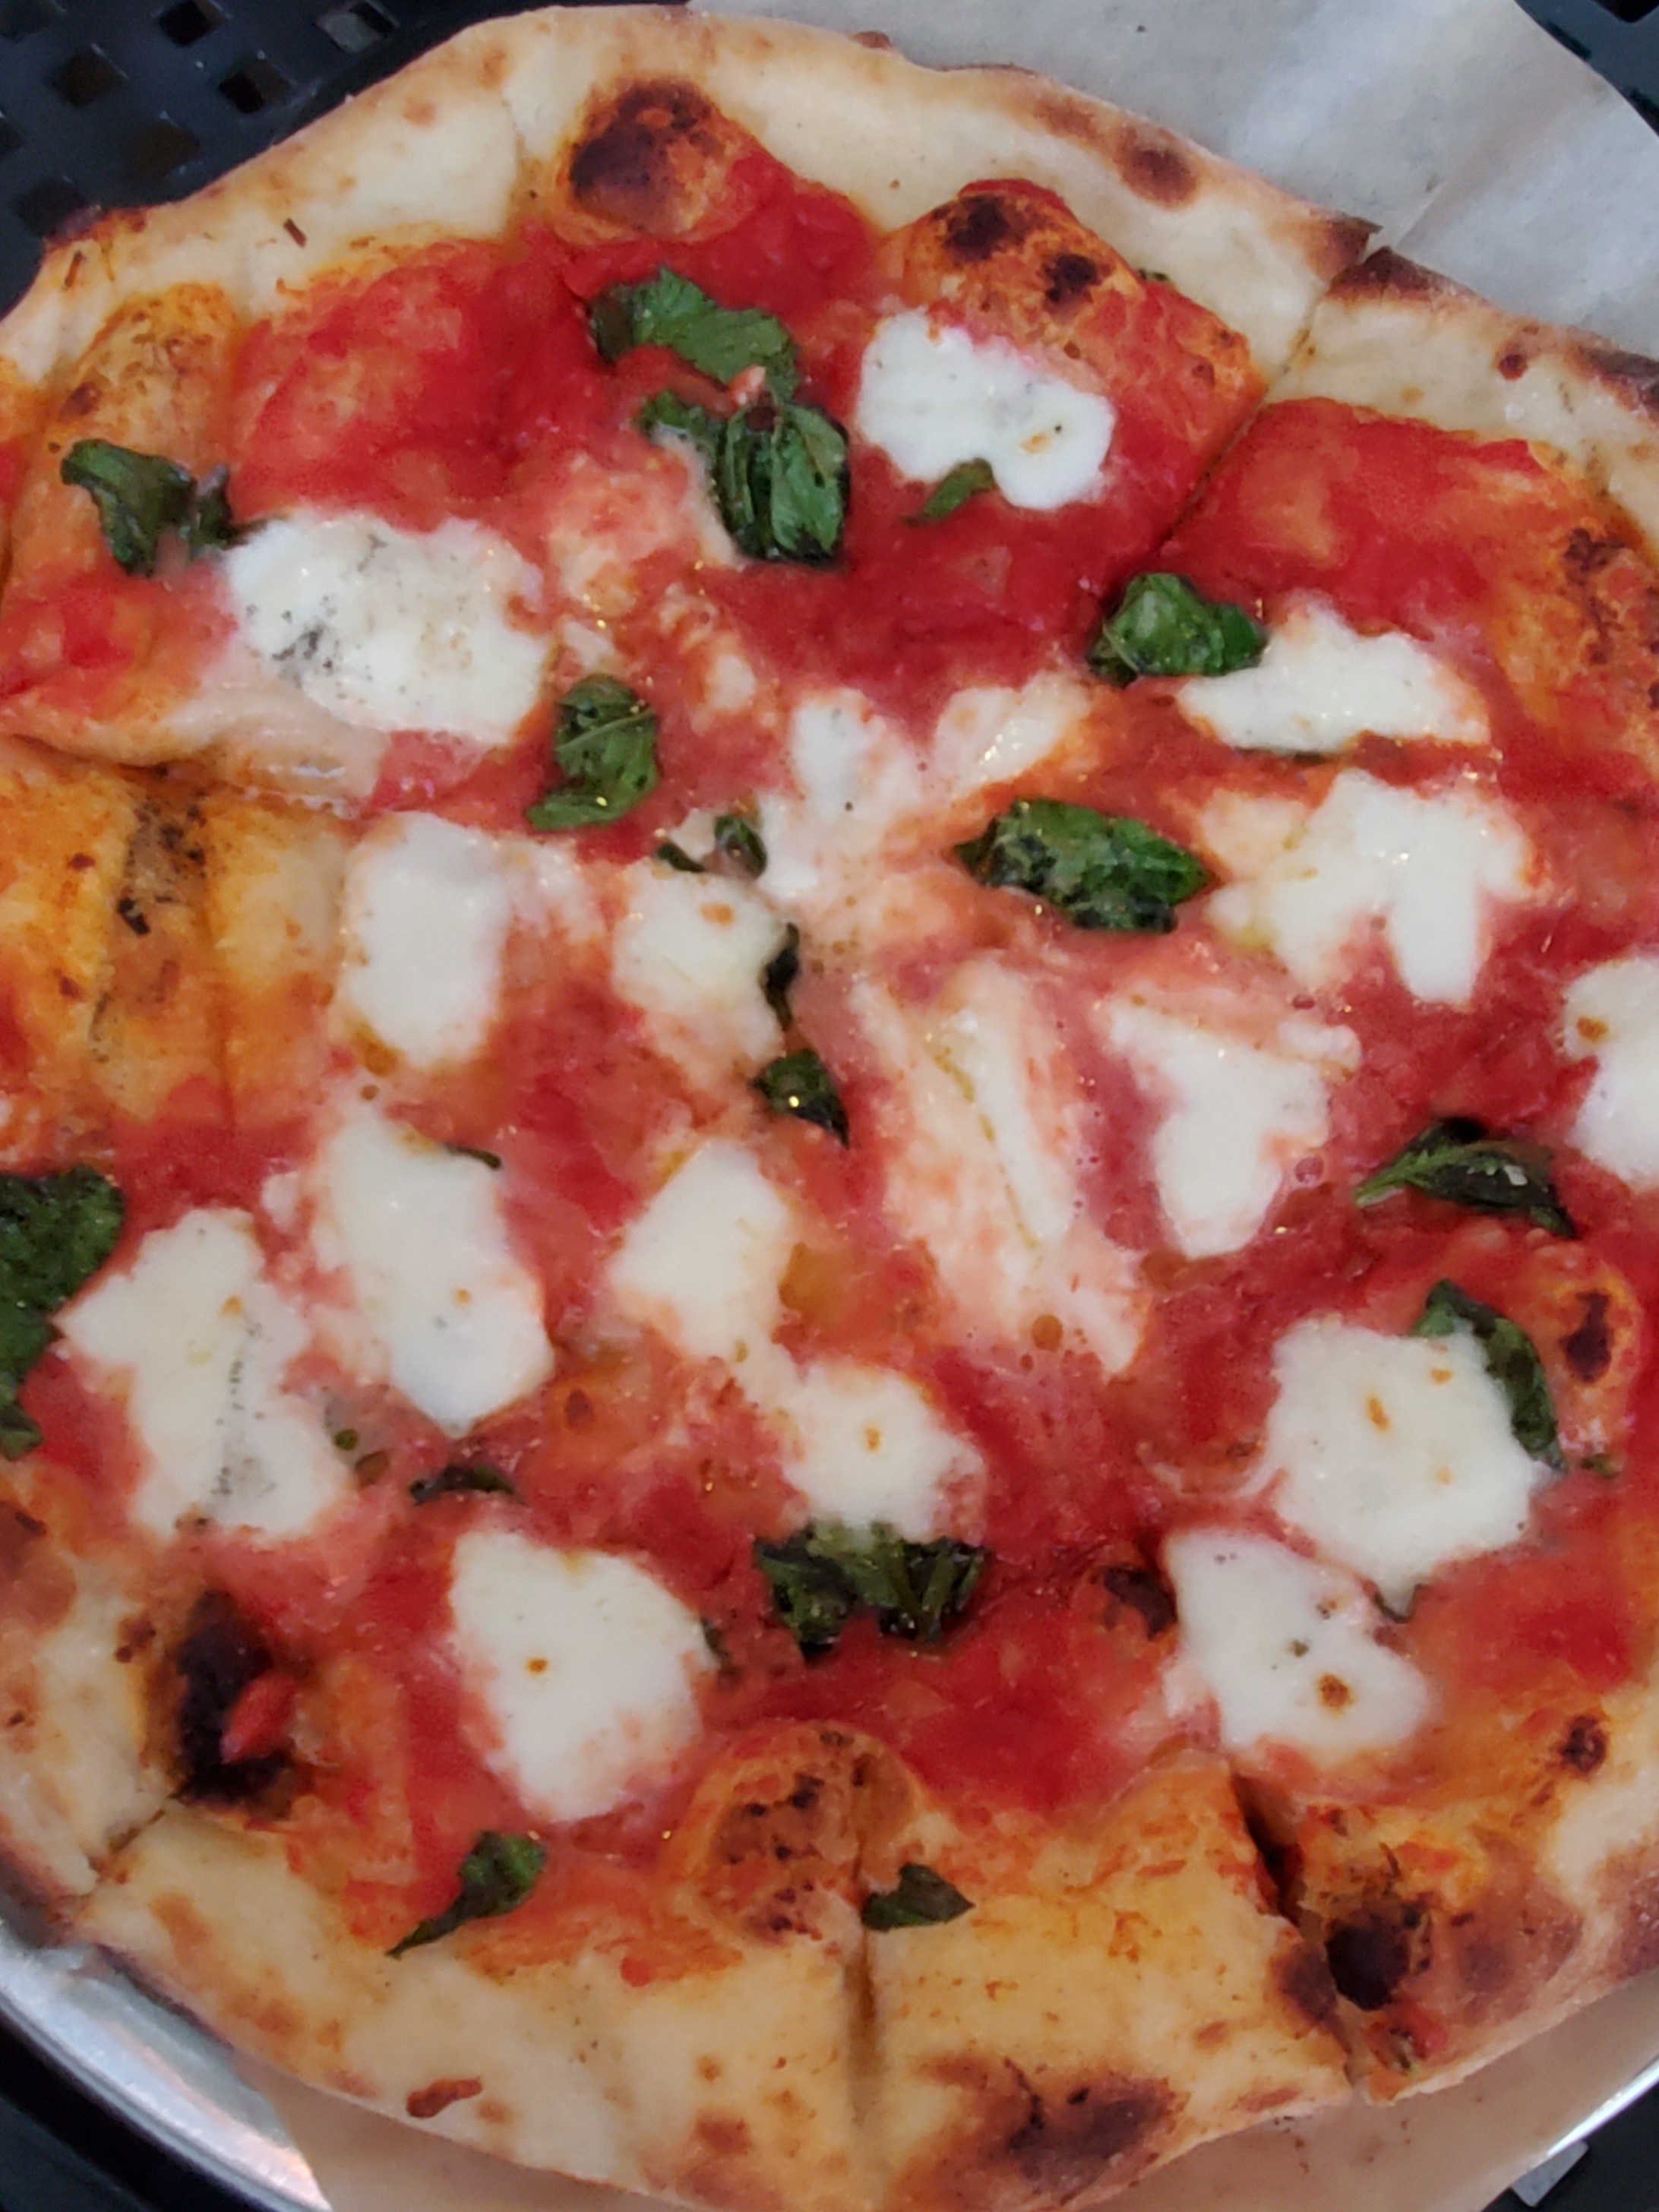 Pizza with marinara sauce and mozzarella cheese